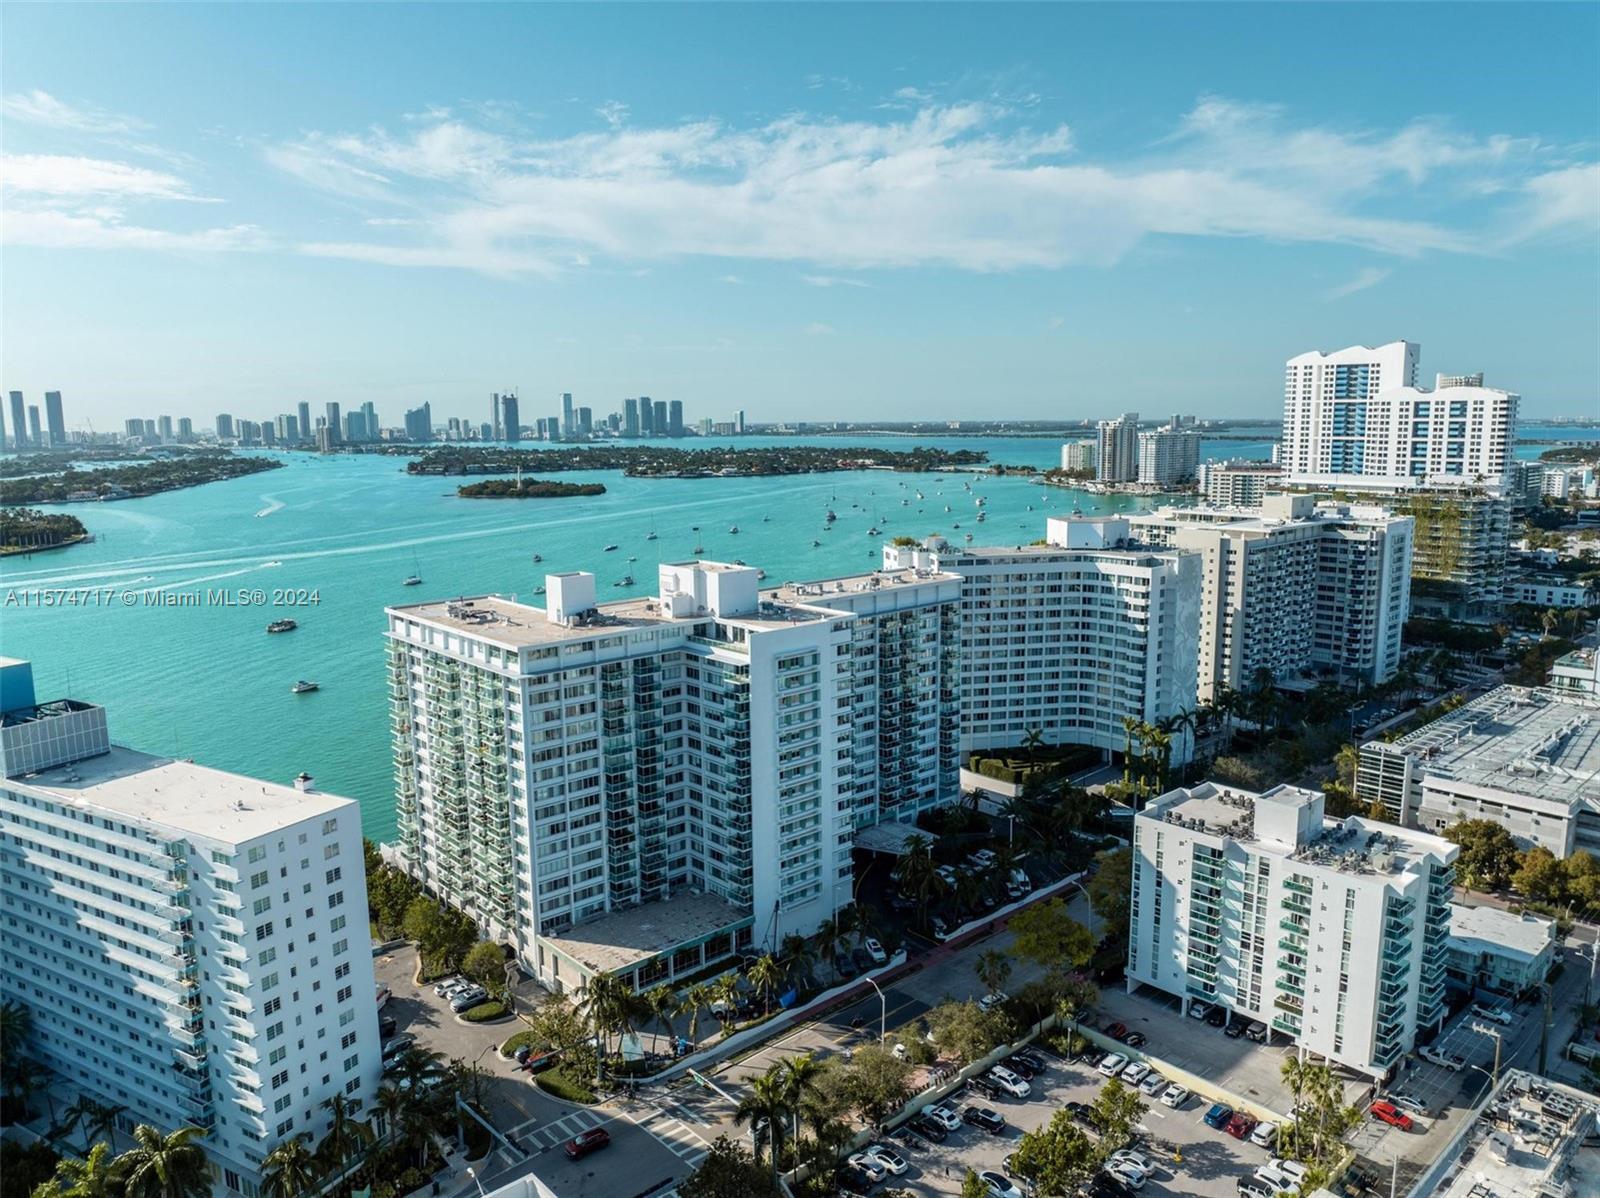 Photo of 1000 West Ave #1522 in Miami Beach, FL